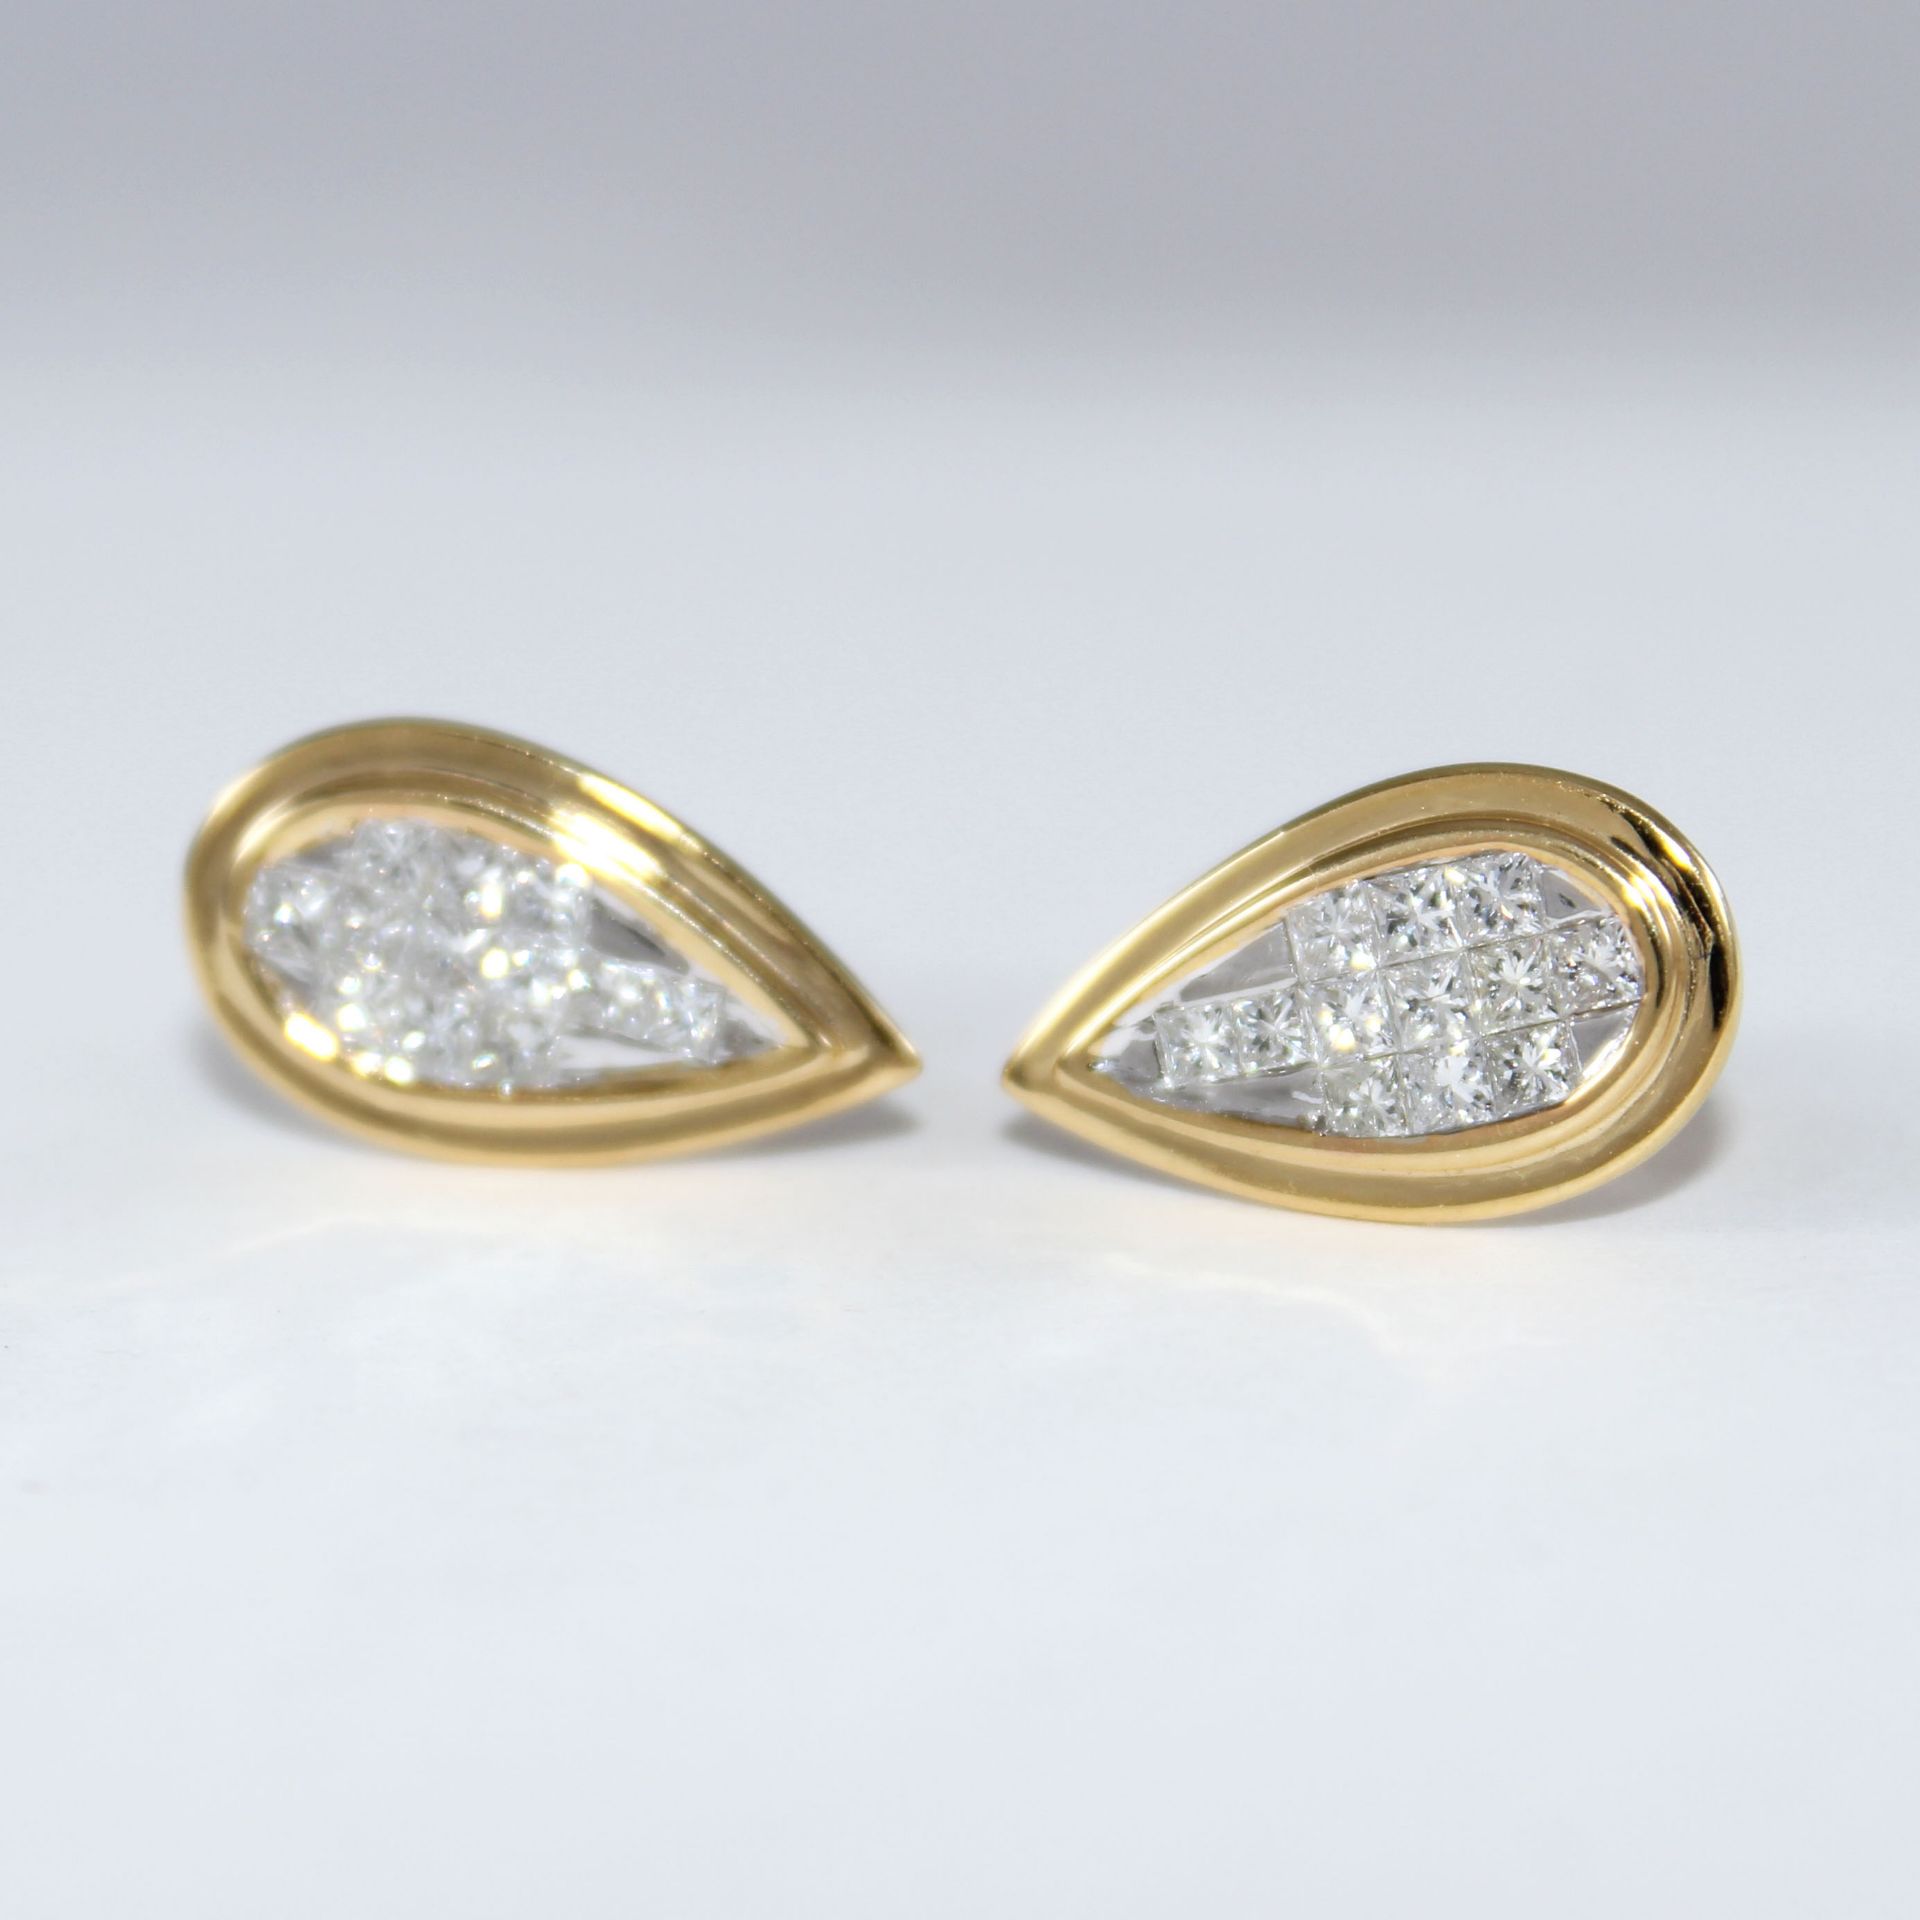 IGI Certified 14 K / 585 Yellow Gold Diamond Earring Studs - Image 4 of 6